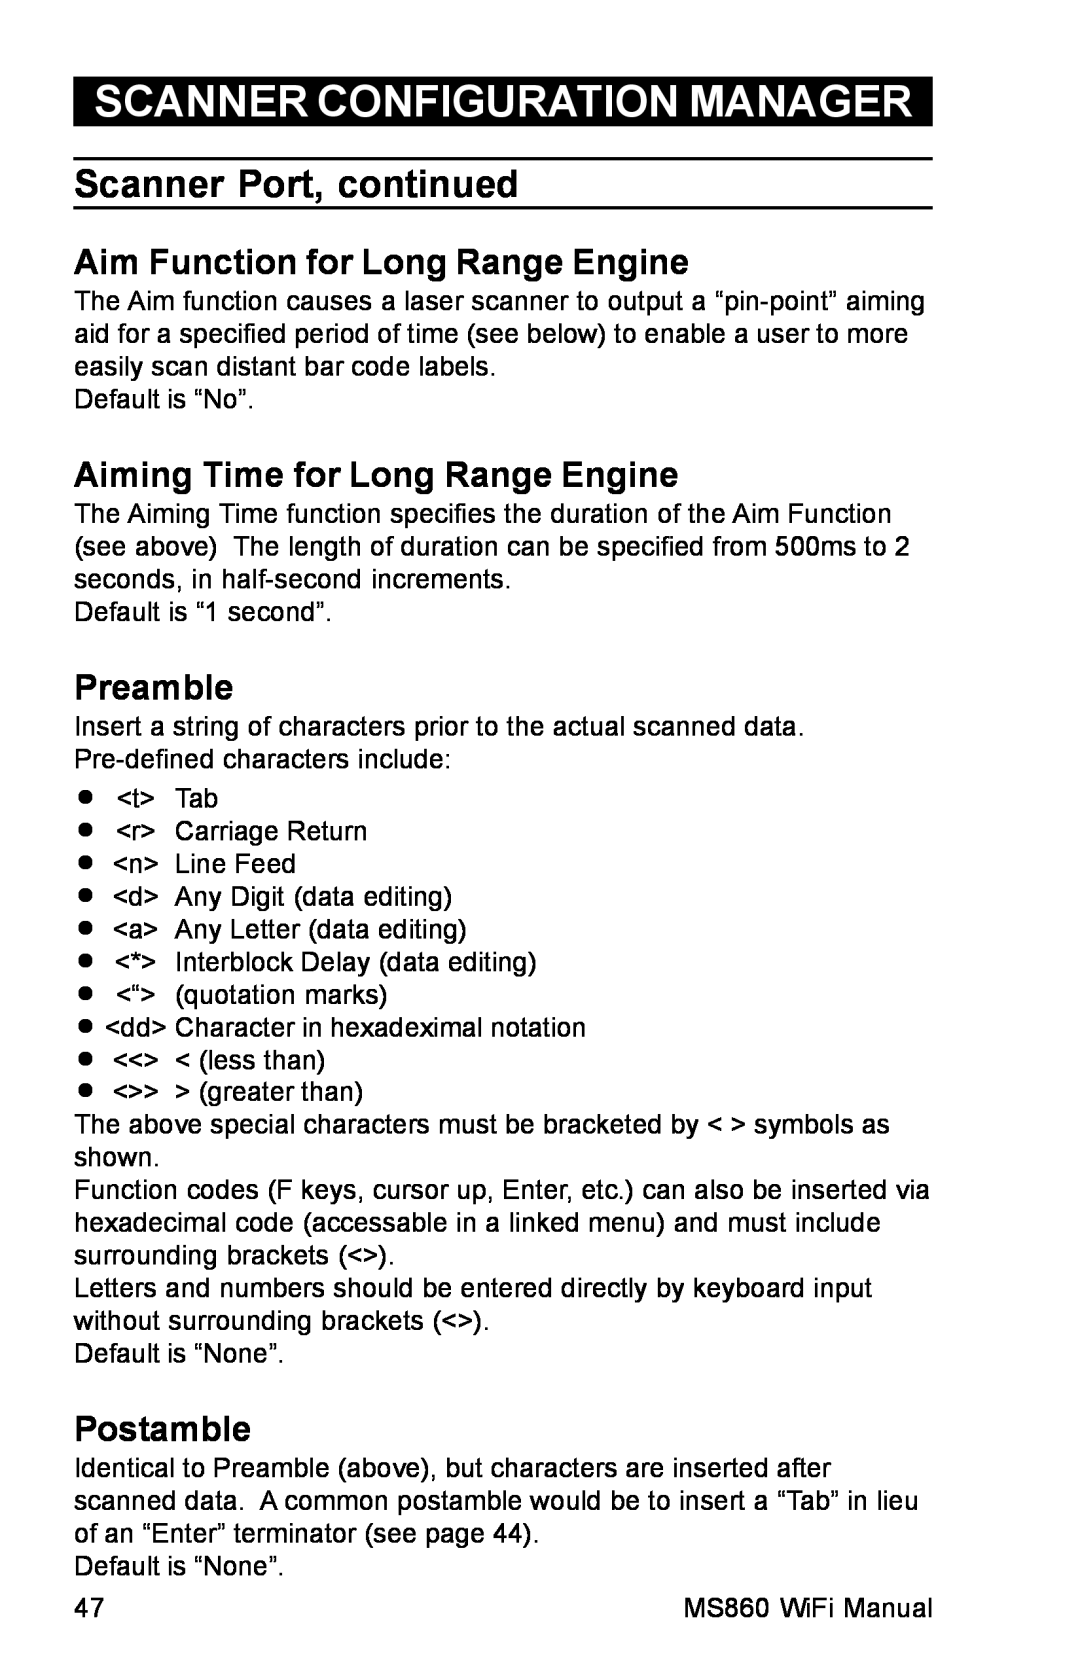 Unitech MS860 manual Aim Function for Long Range Engine, Aiming Time for Long Range Engine, Preamble, Postamble 